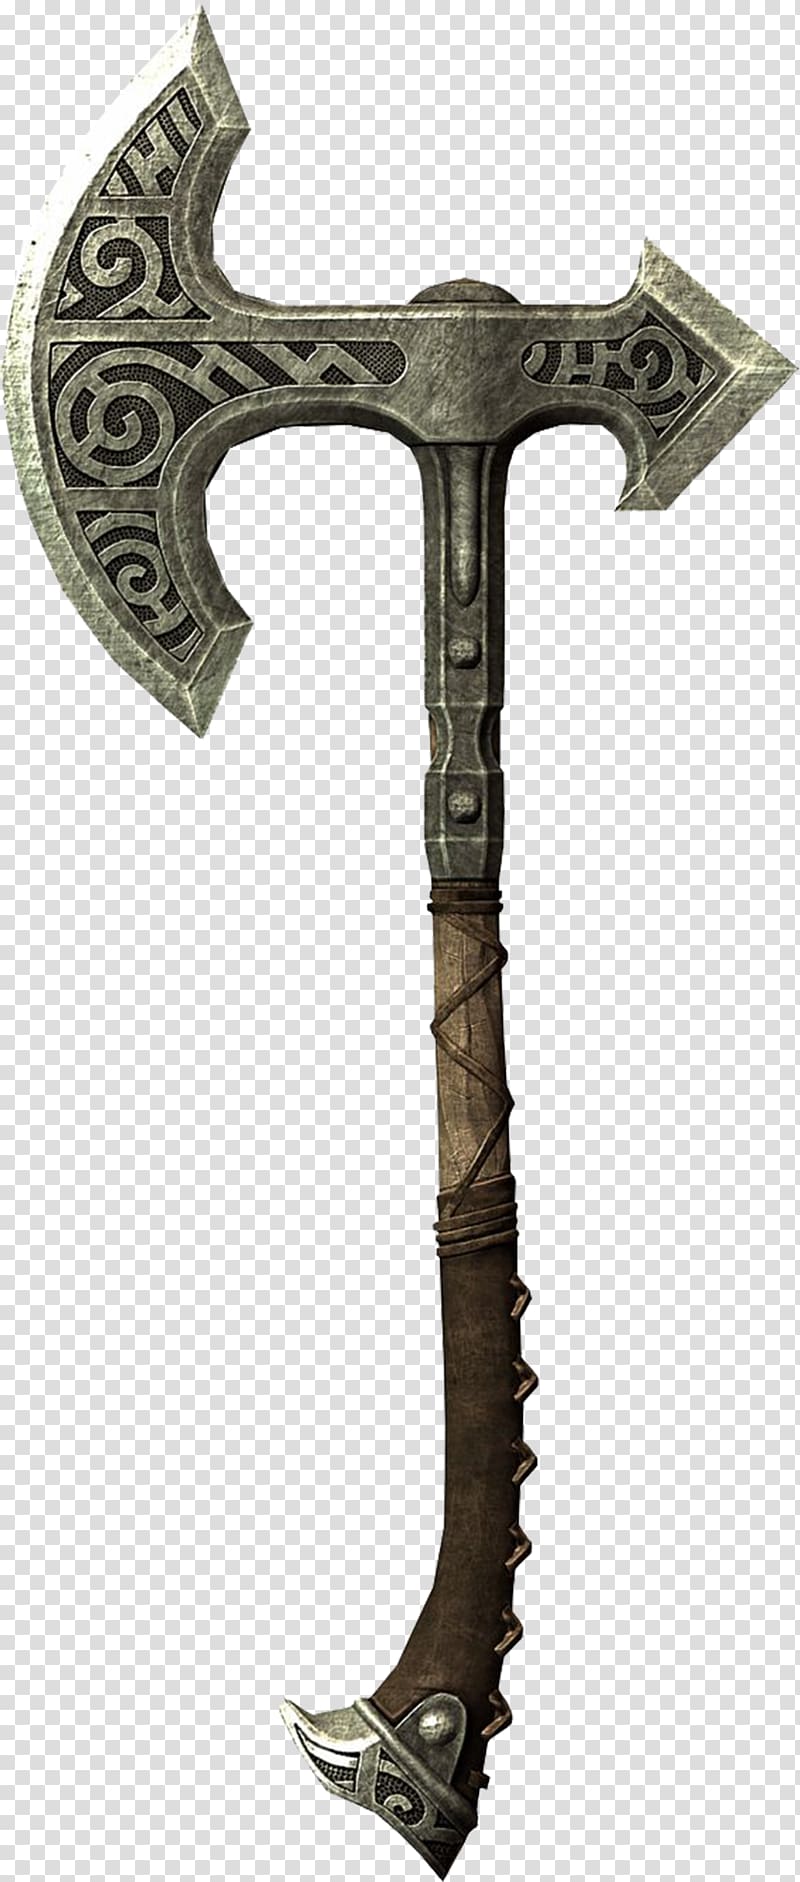 The Elder Scrolls V: Skyrim u2013 Dawnguard Battle axe Steel, Retro ax transparent background PNG clipart